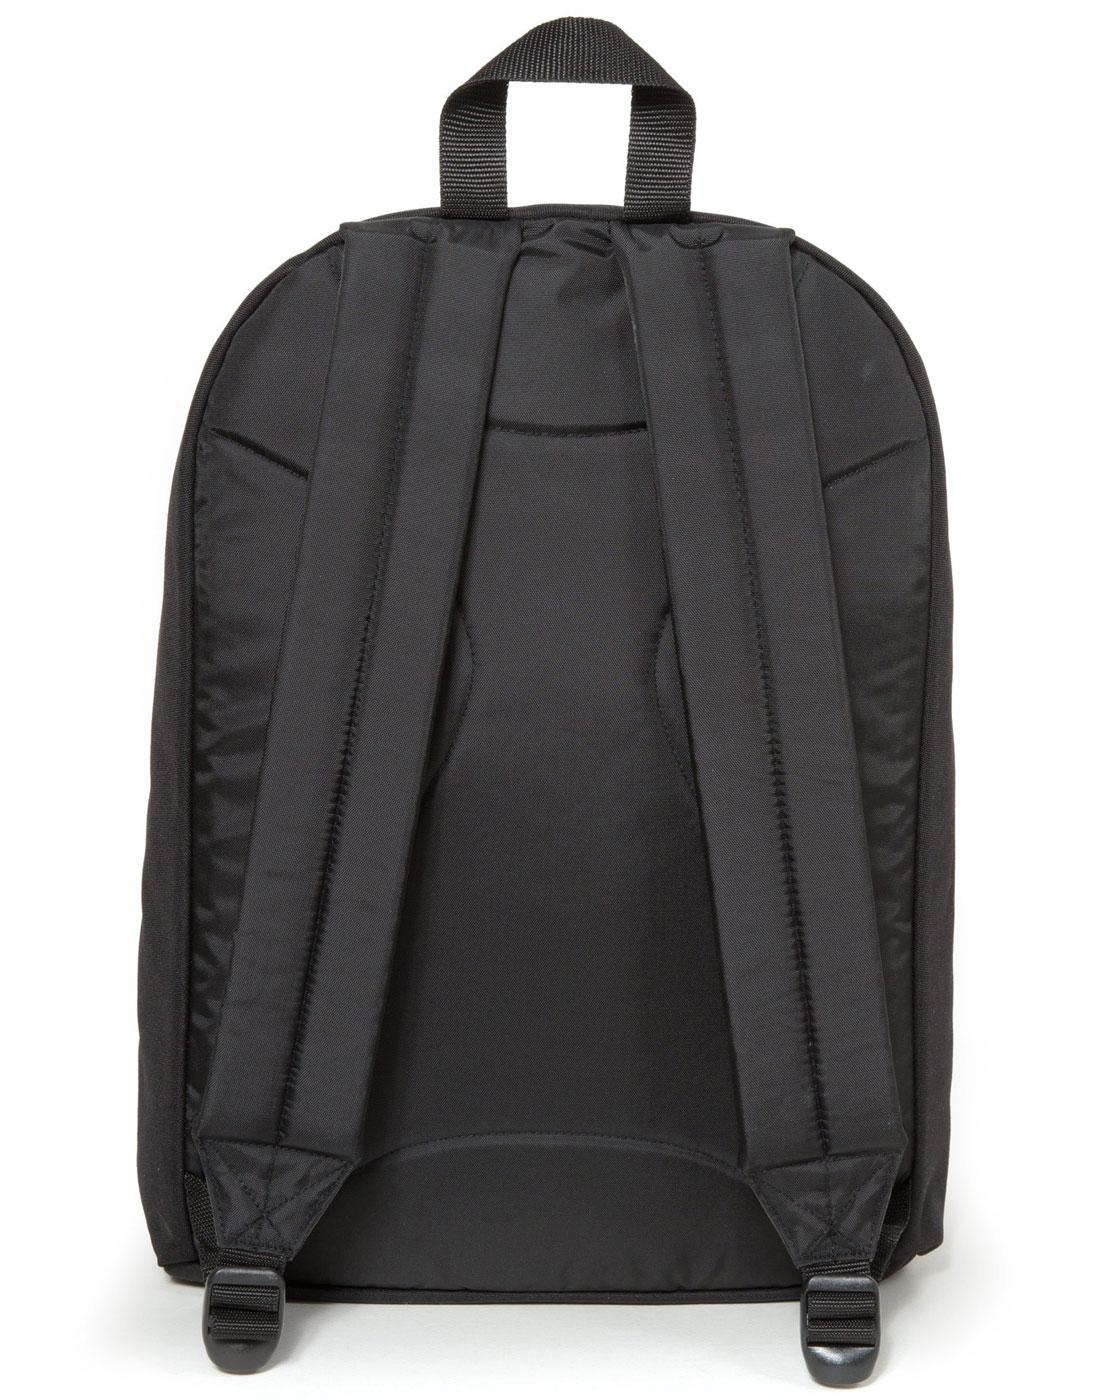 EASTPAK Out Of Office Mod Ska Check Weave Backpack in Black/Grey